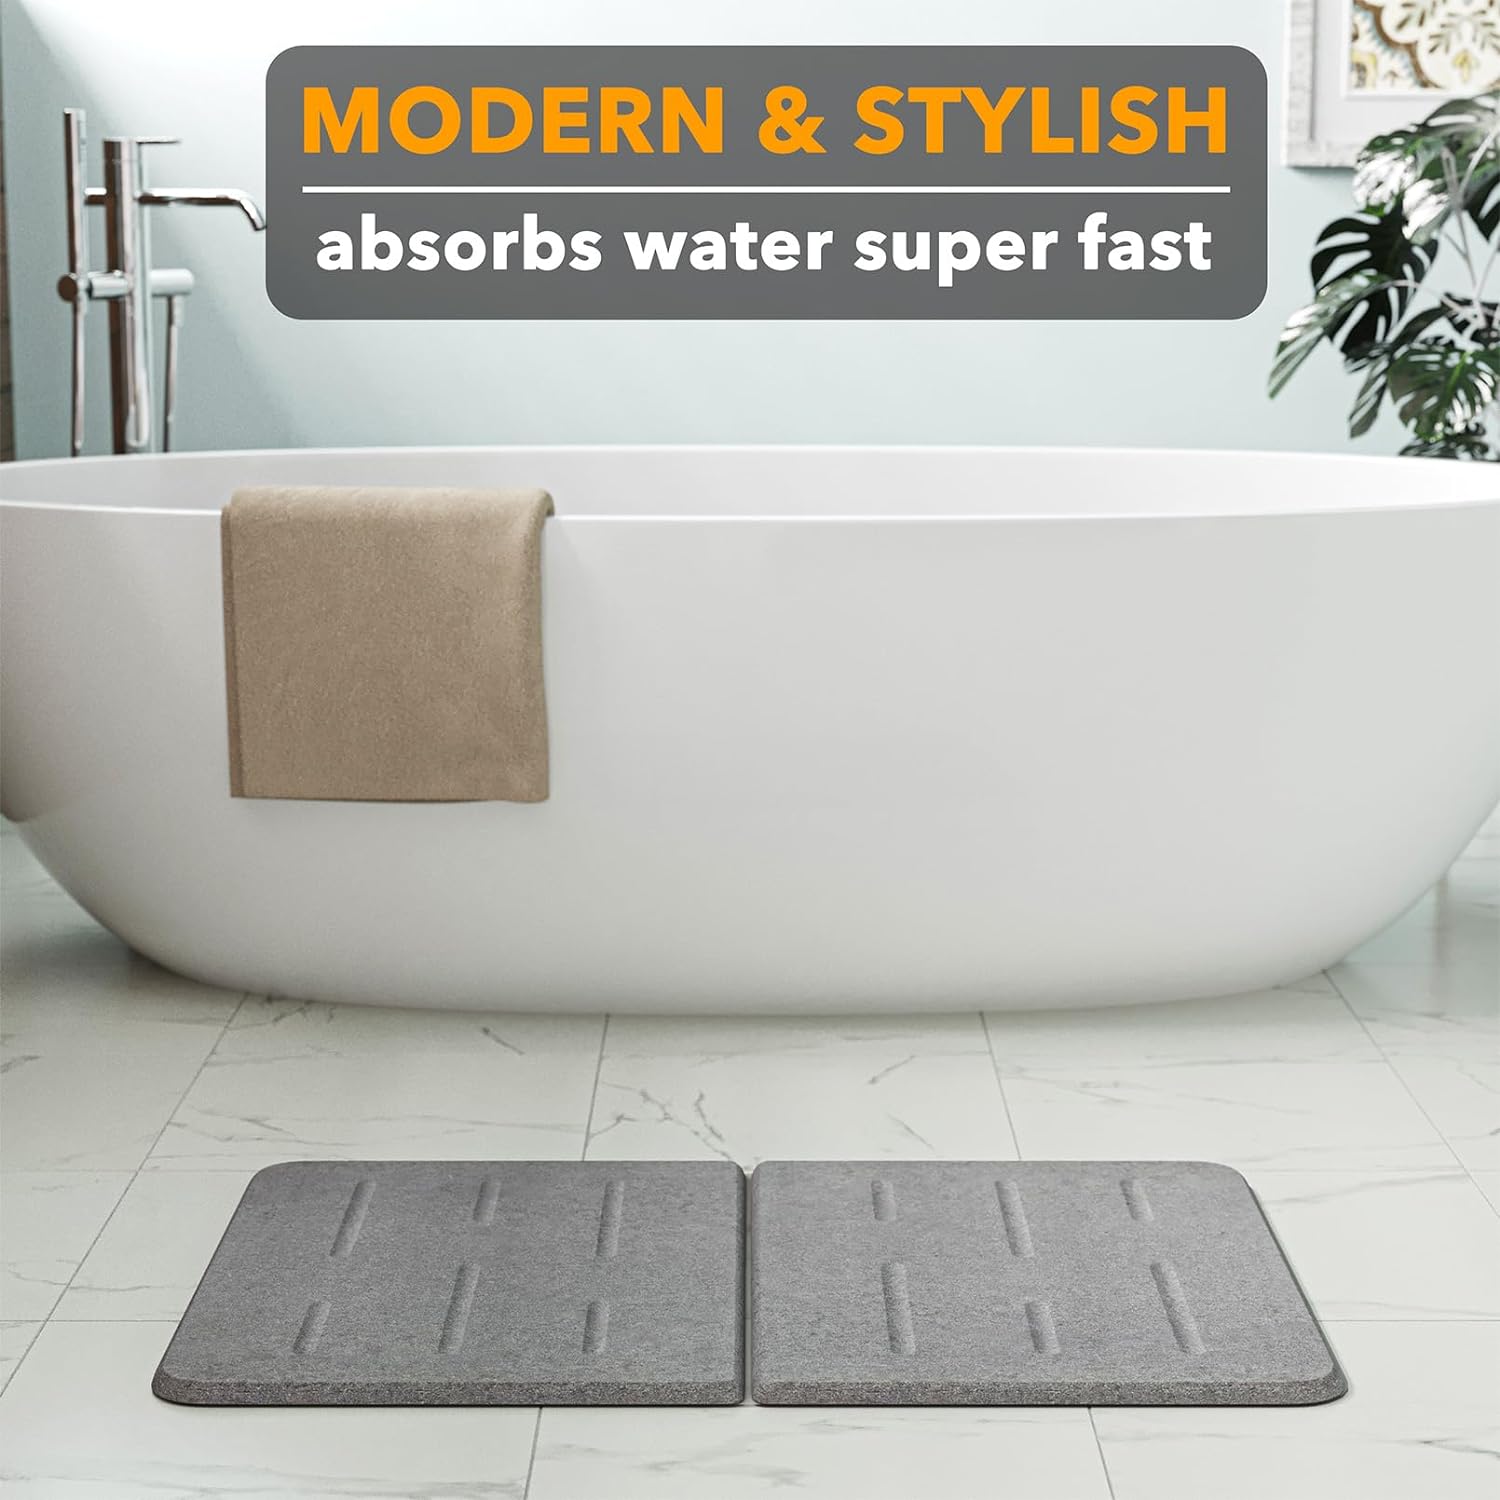 stone bath mat that absorbs water